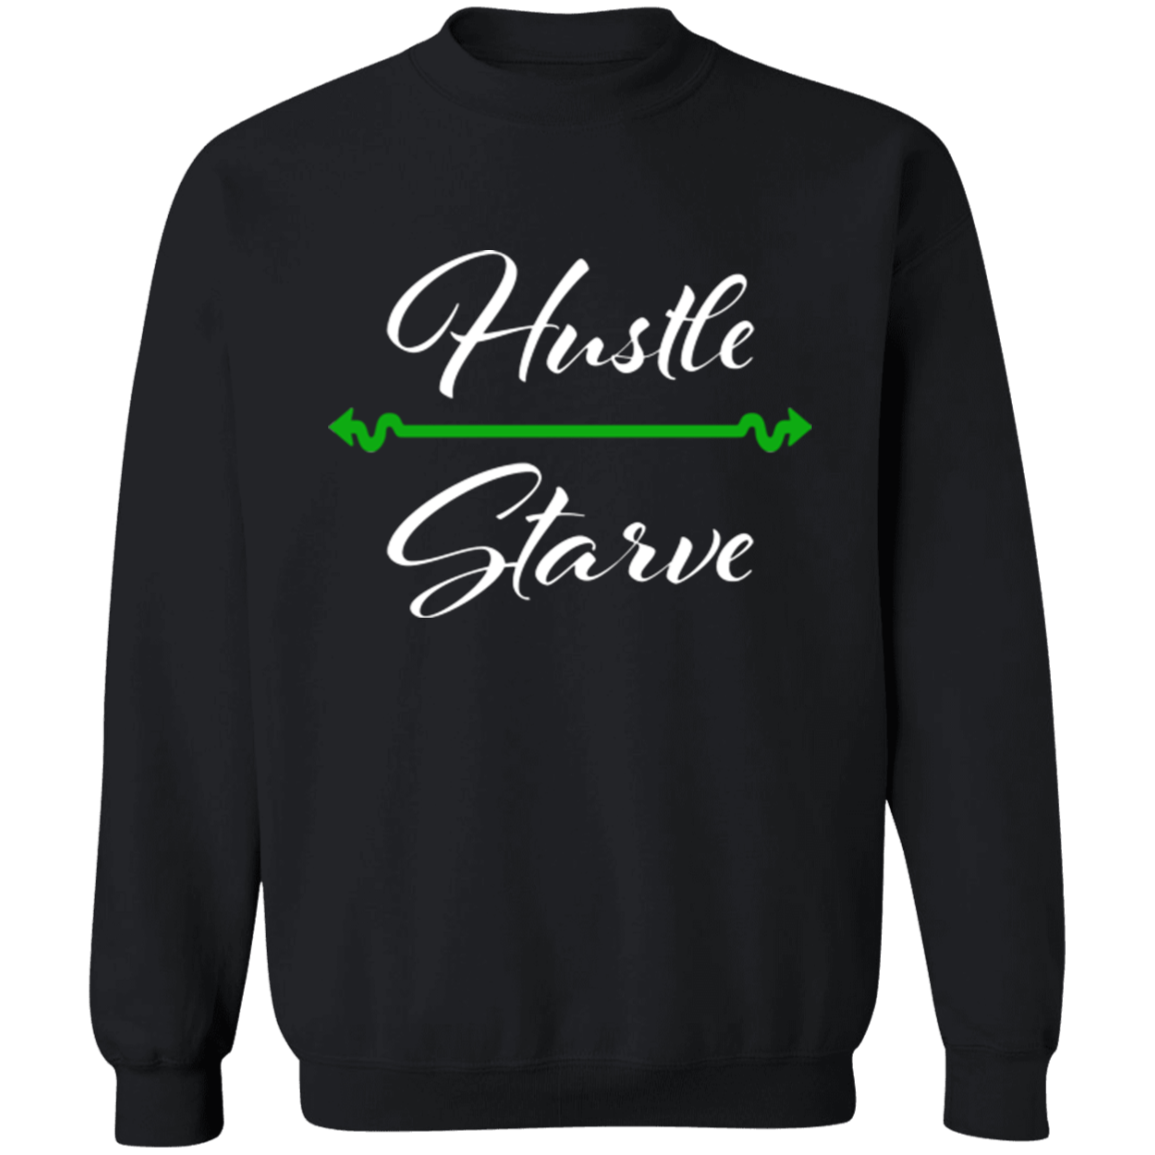 Hustle over Starve Crewneck Pullover Sweatshirt  8 oz.